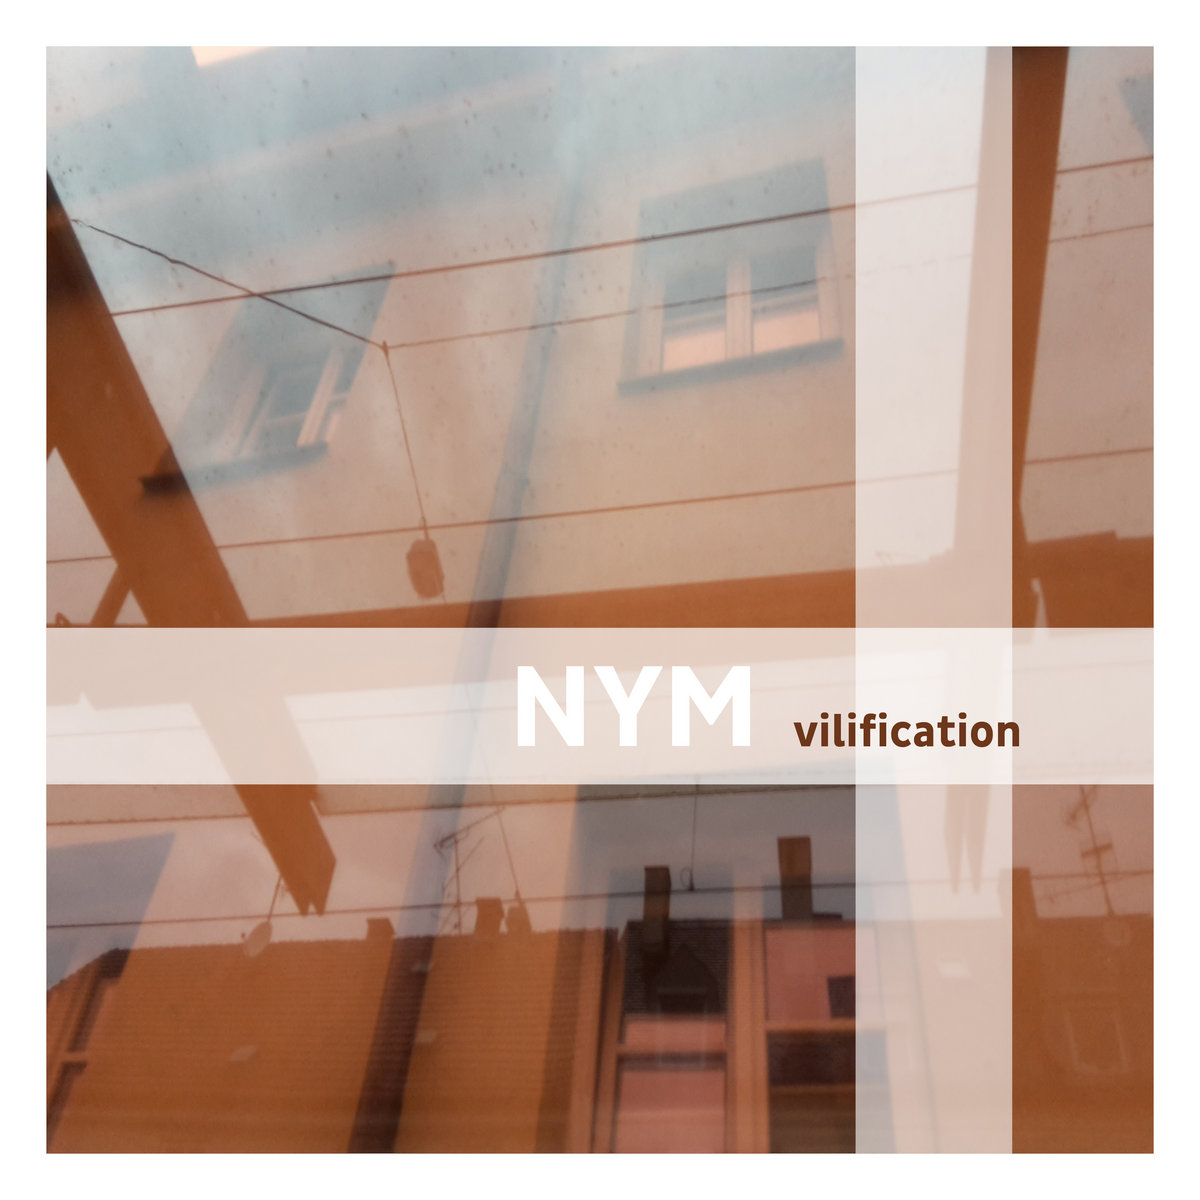 NYM – vilification